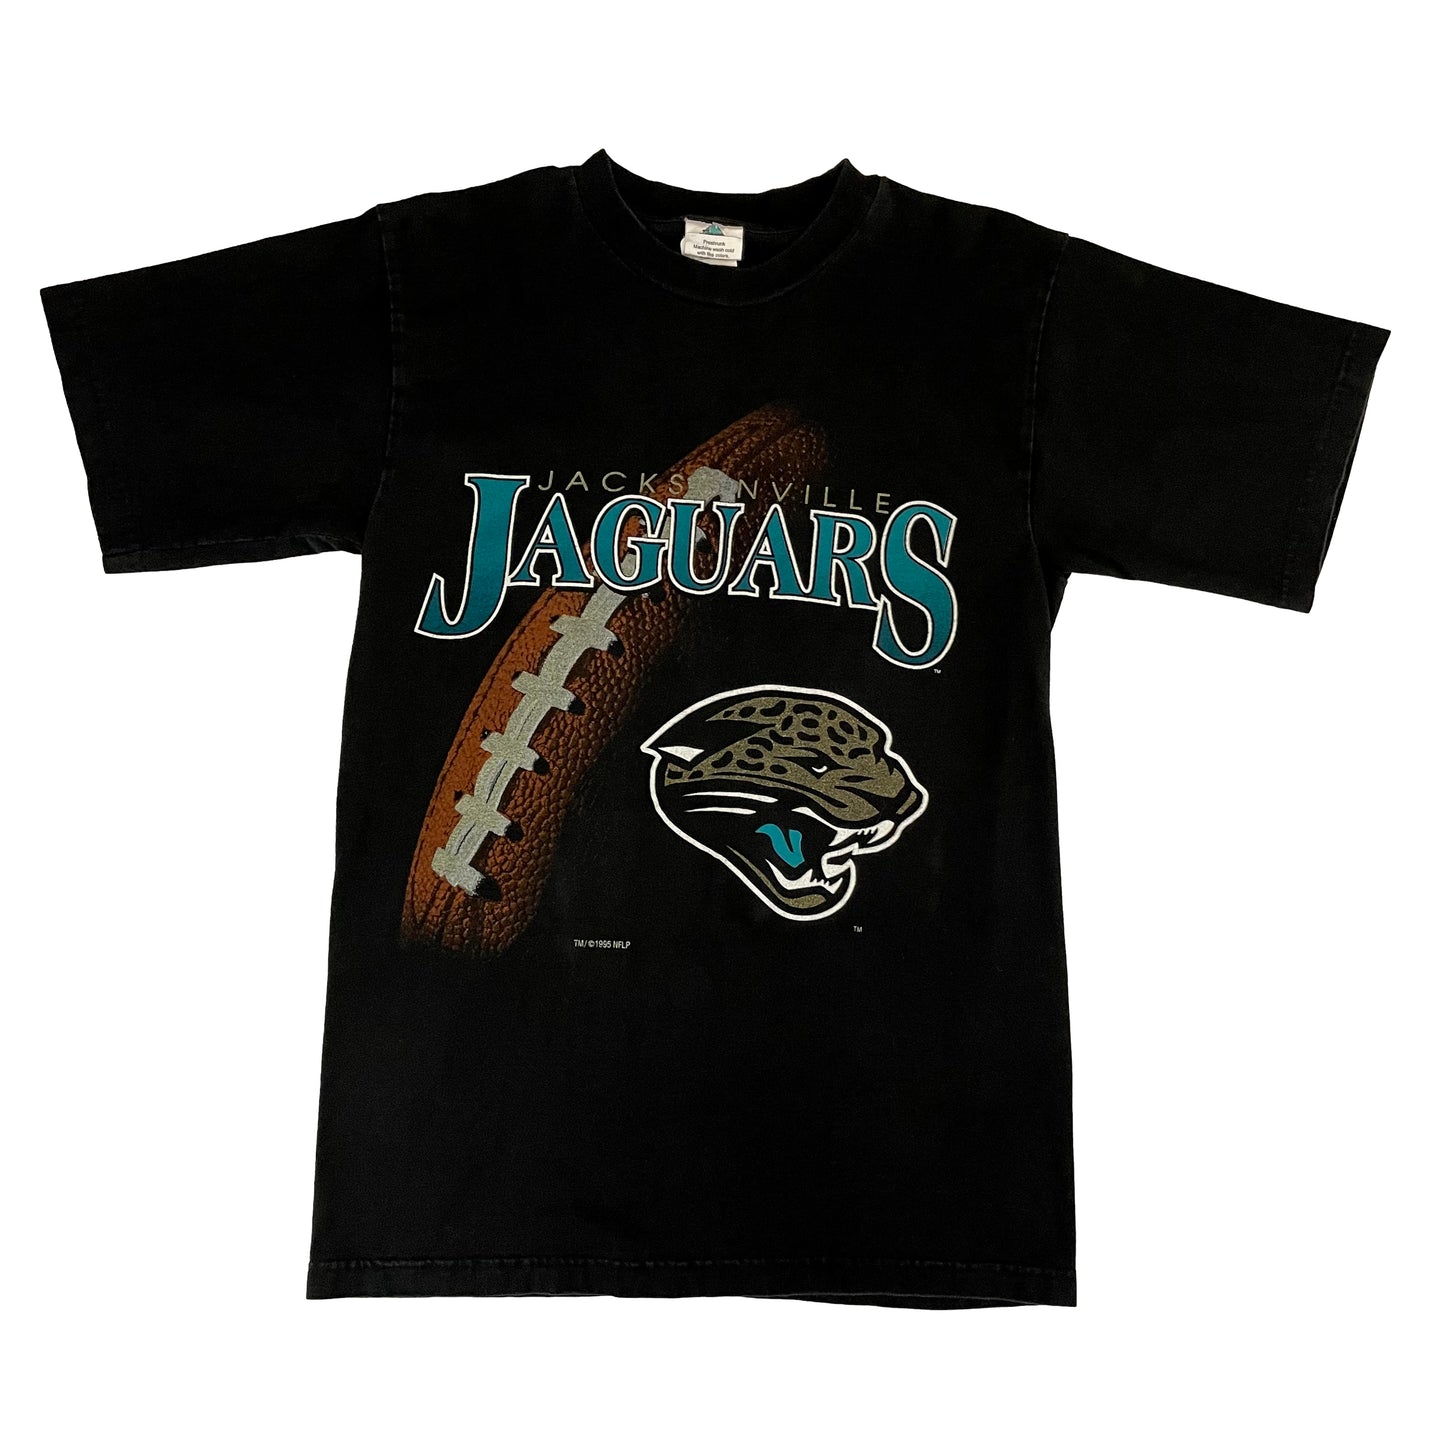 Jacksonville Jaguars shirt